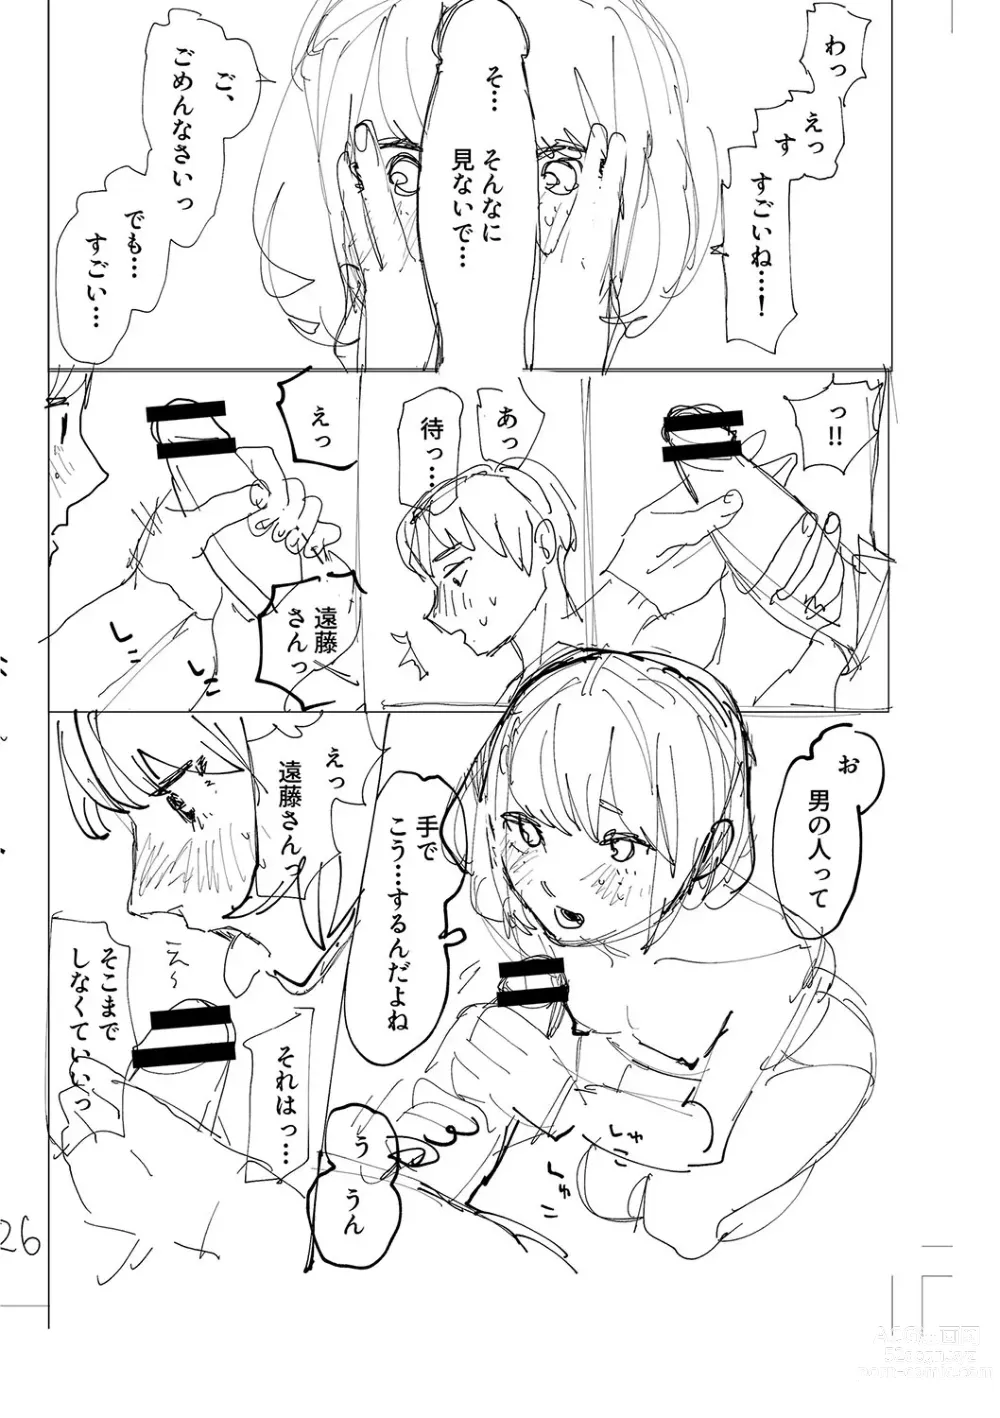 Page 239 of manga Oyasumi, Teen - Good Night, Goodbye